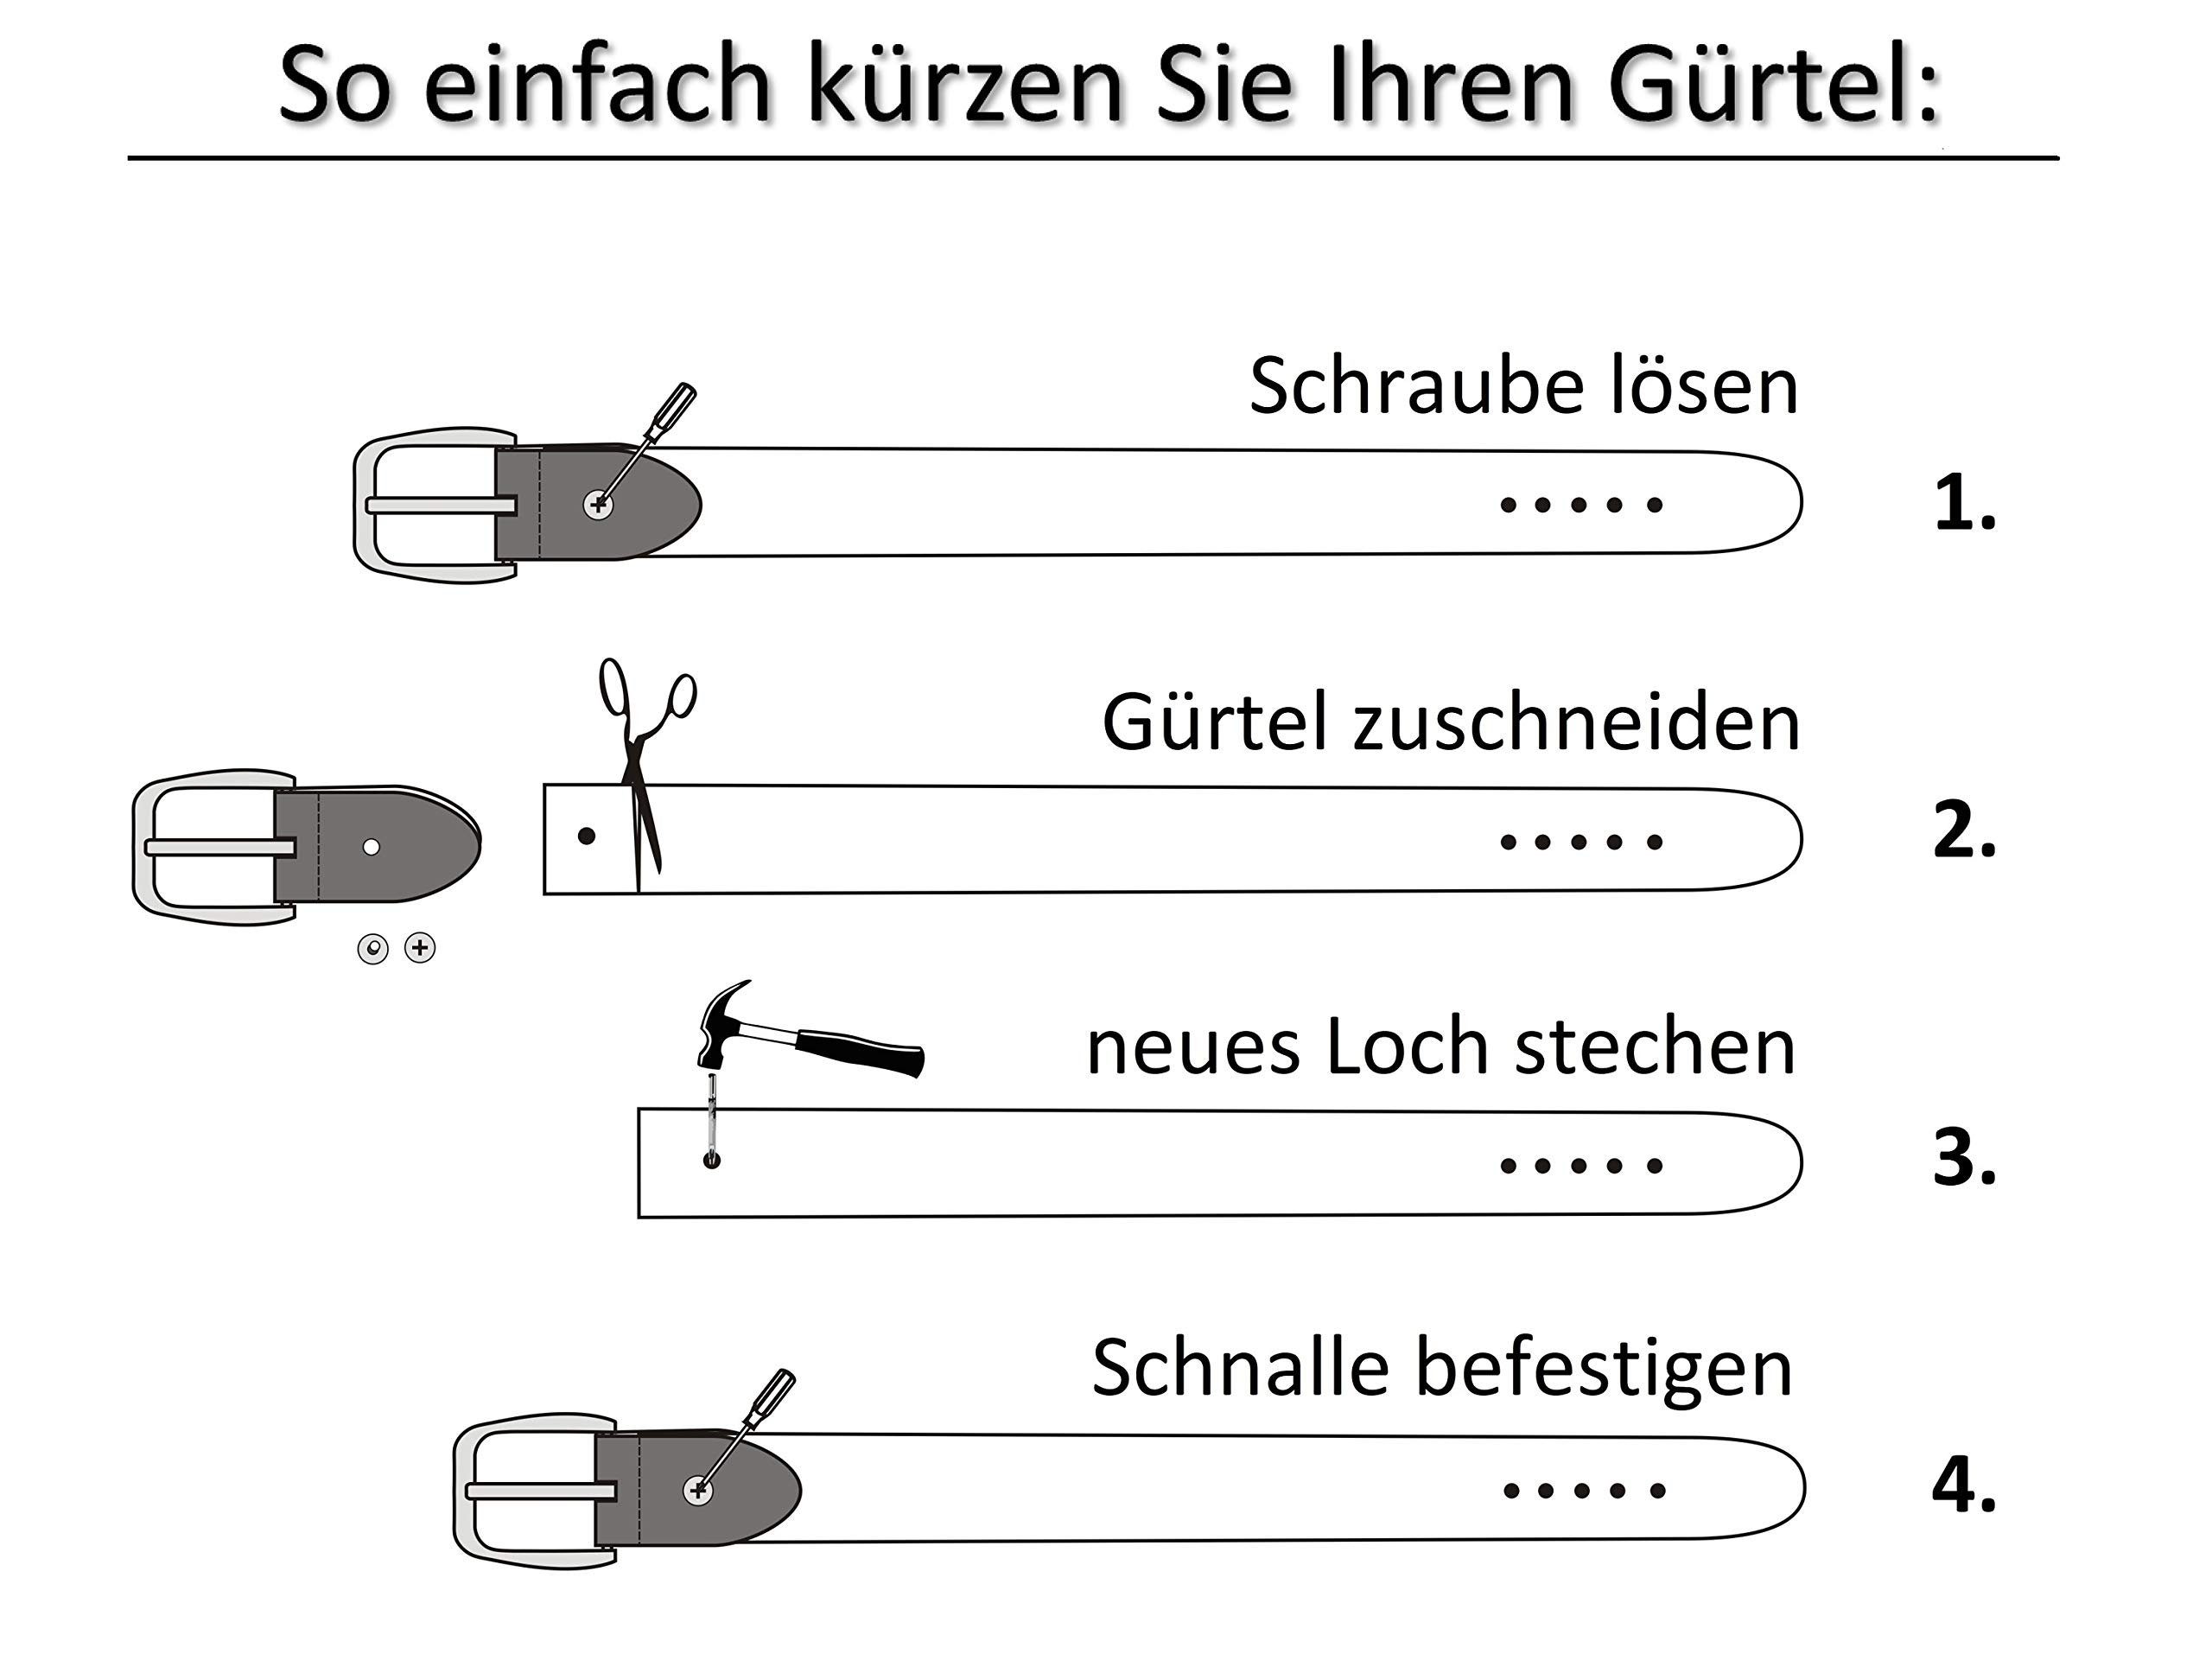 Echtleder, Gürtel kürzbar, Ledergürtel aus IN aus cm MADE breiter Leder, 3 100% Schwarz Frentree GERMANY